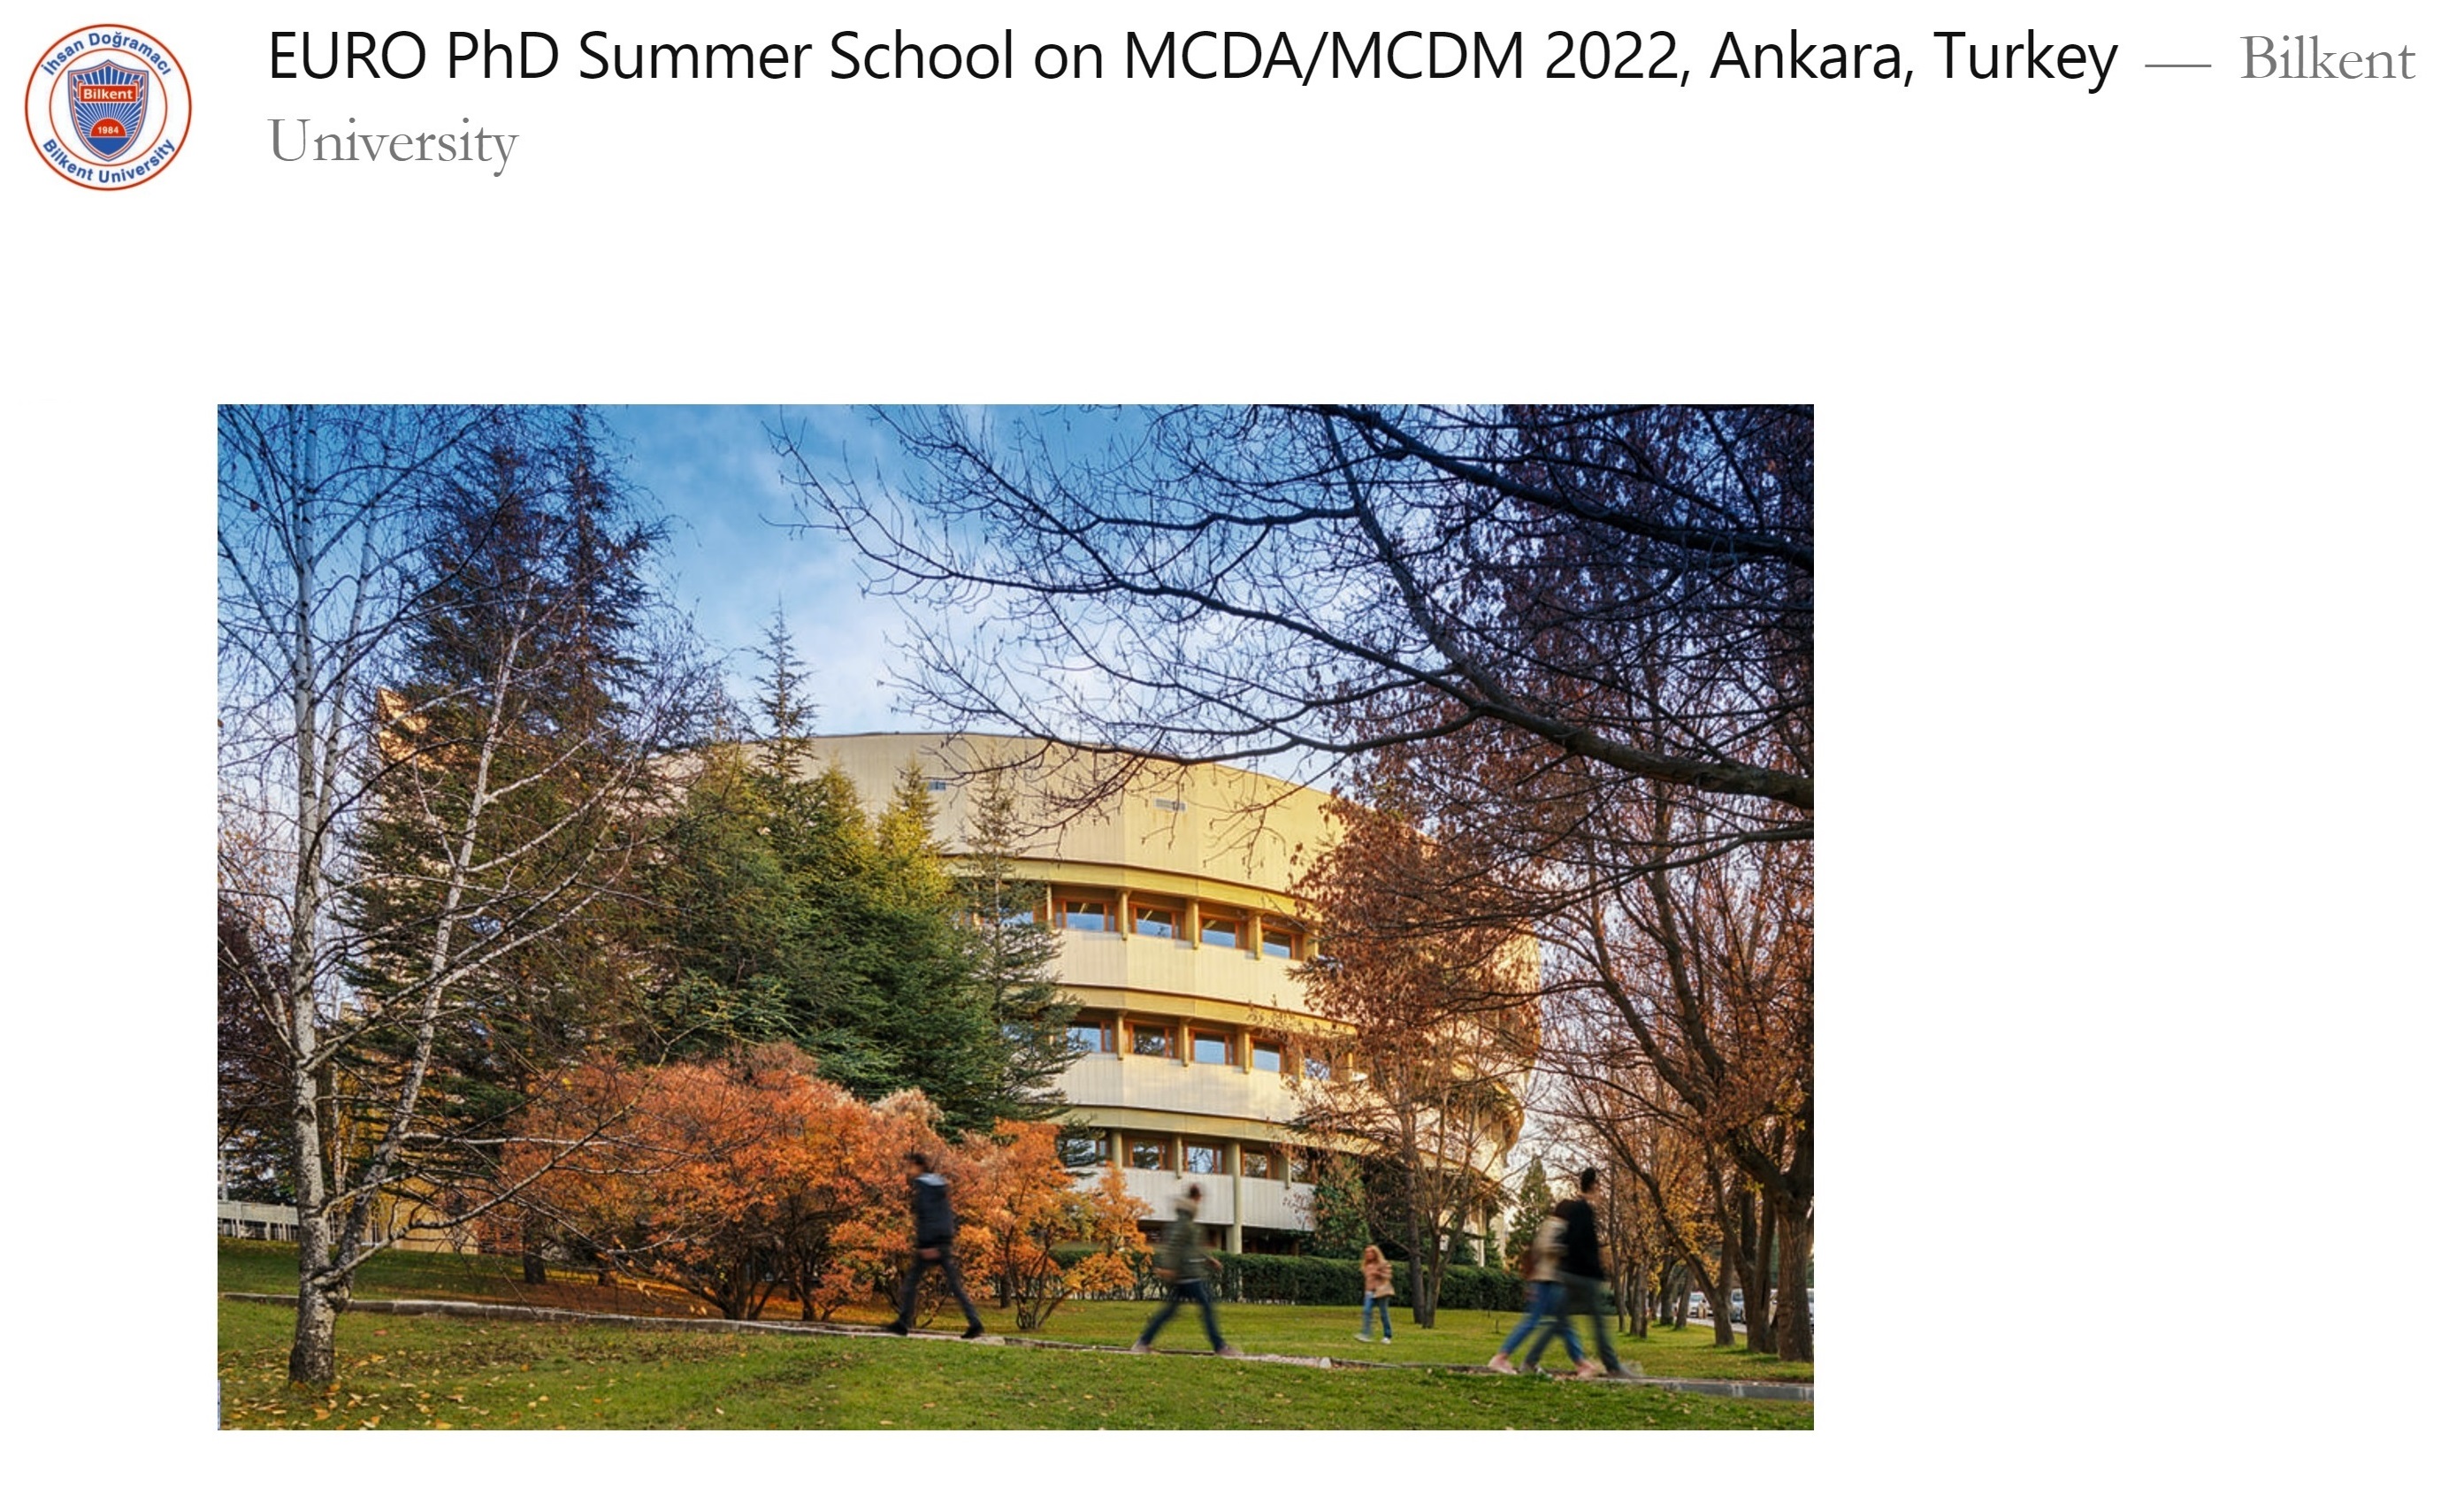 EURO PhD Summer School on MCDA/MCDM, July 18-29, 2022, Bilkent, Turkey